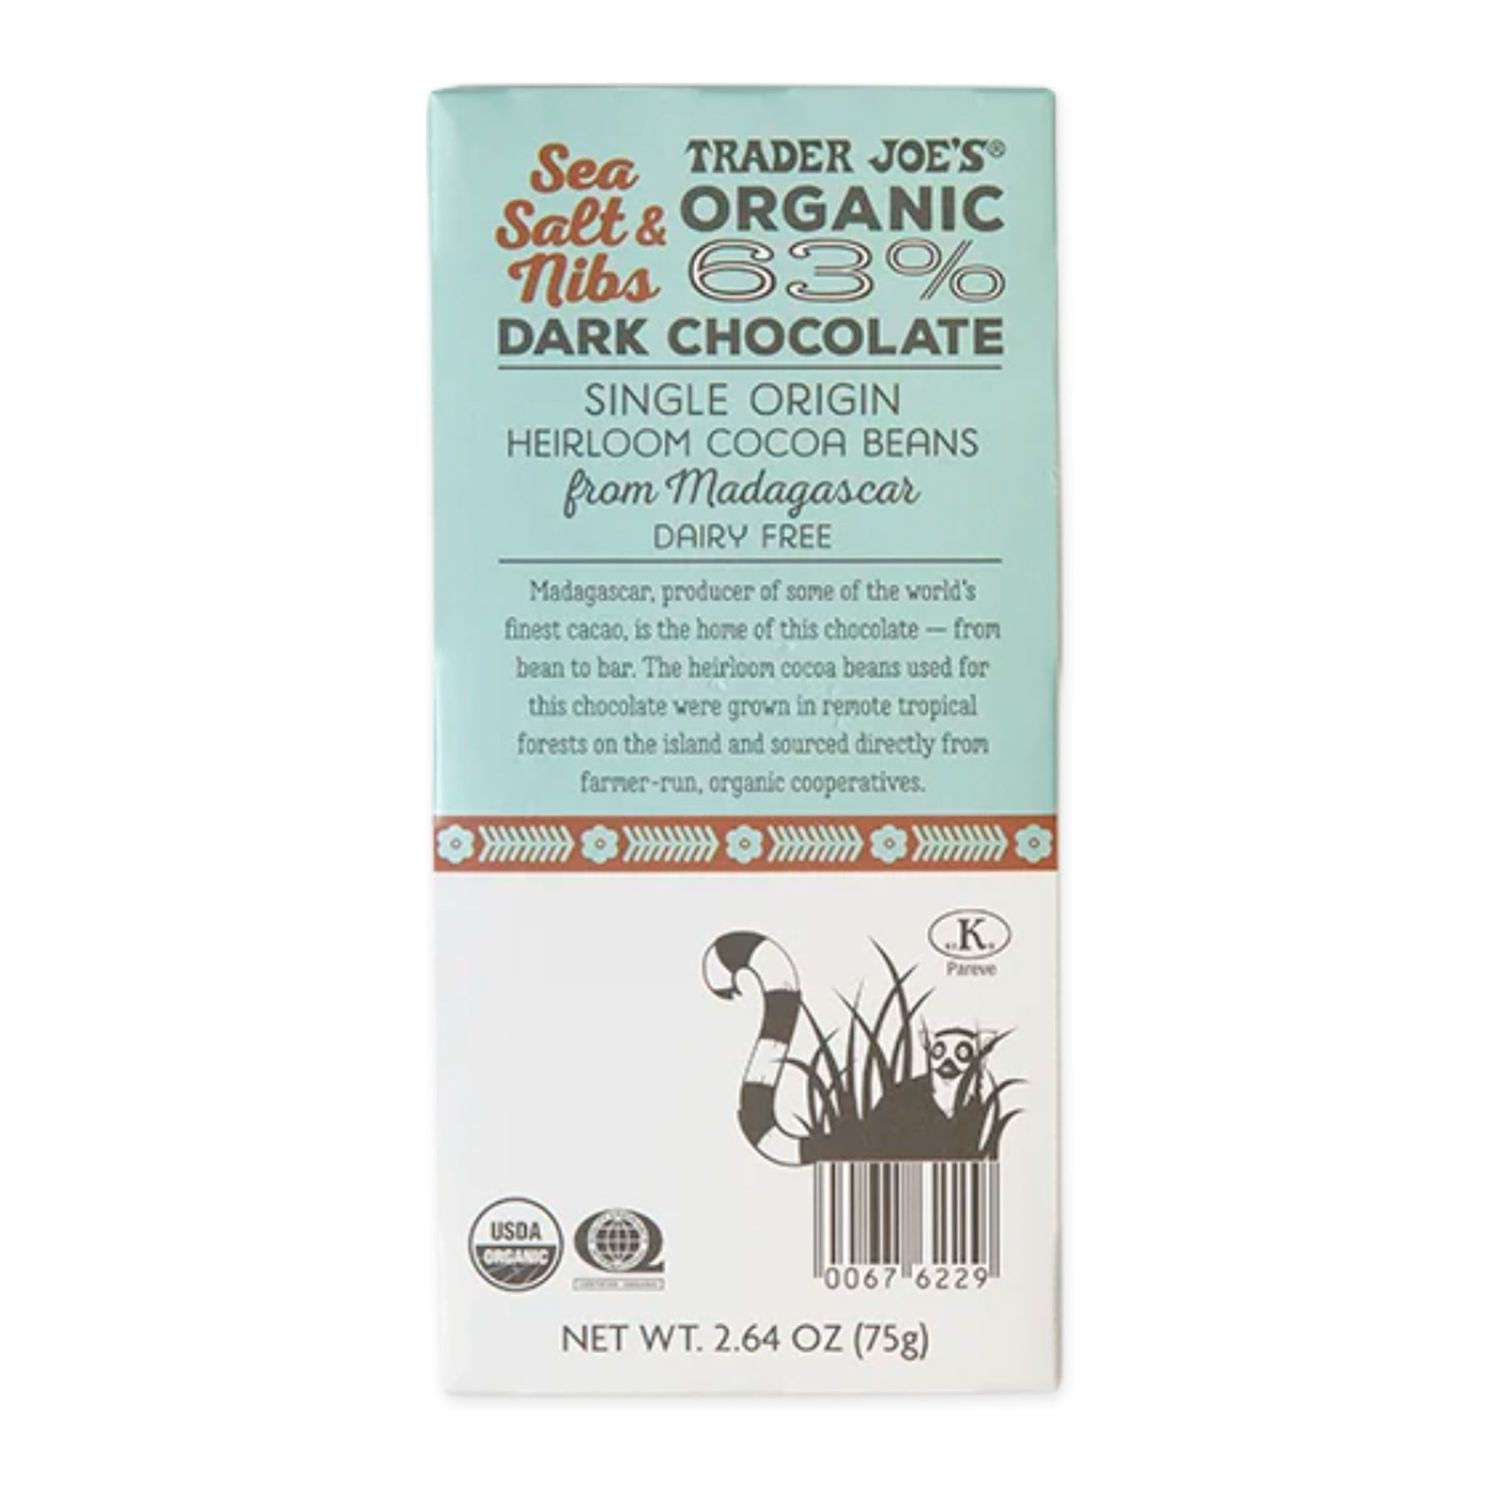 Trader Joe's Gifts Organic Sea Salt & Nibs 63% Dark Chocolate Bar